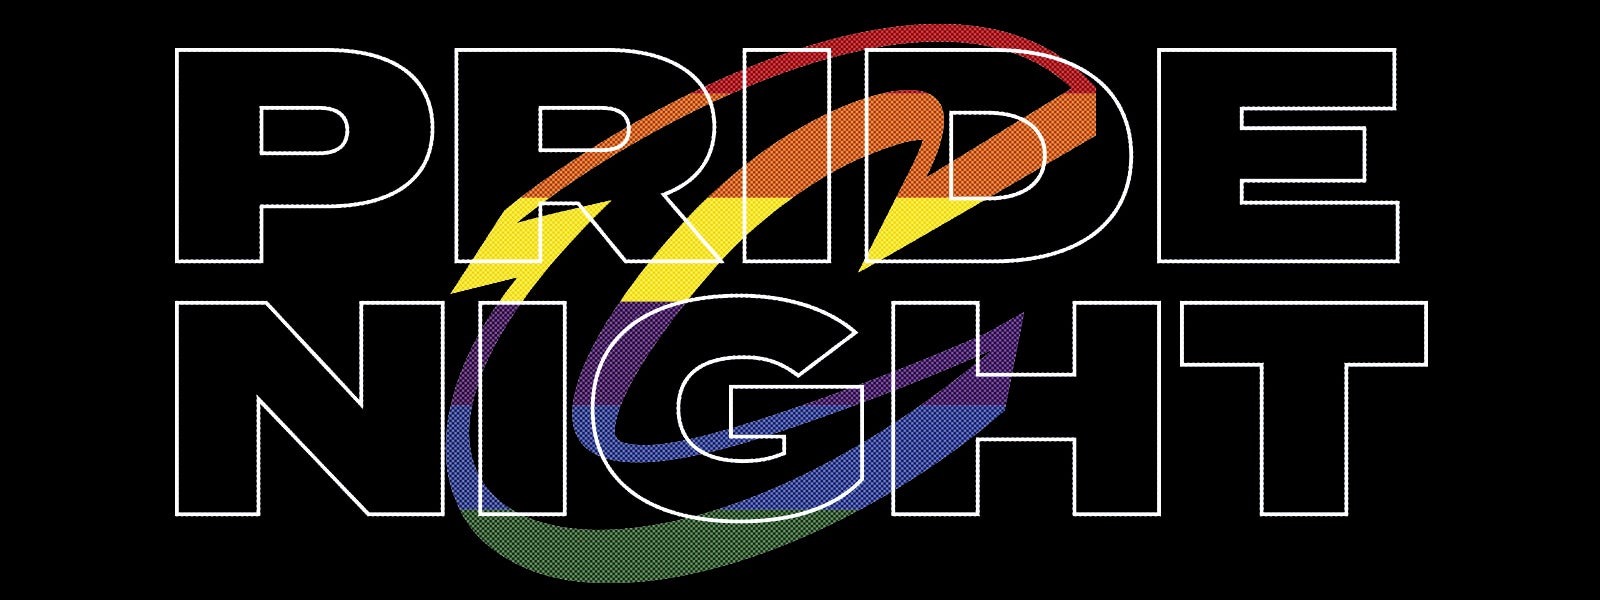 Companies Pride Night Rocket Mortgage FieldHouse